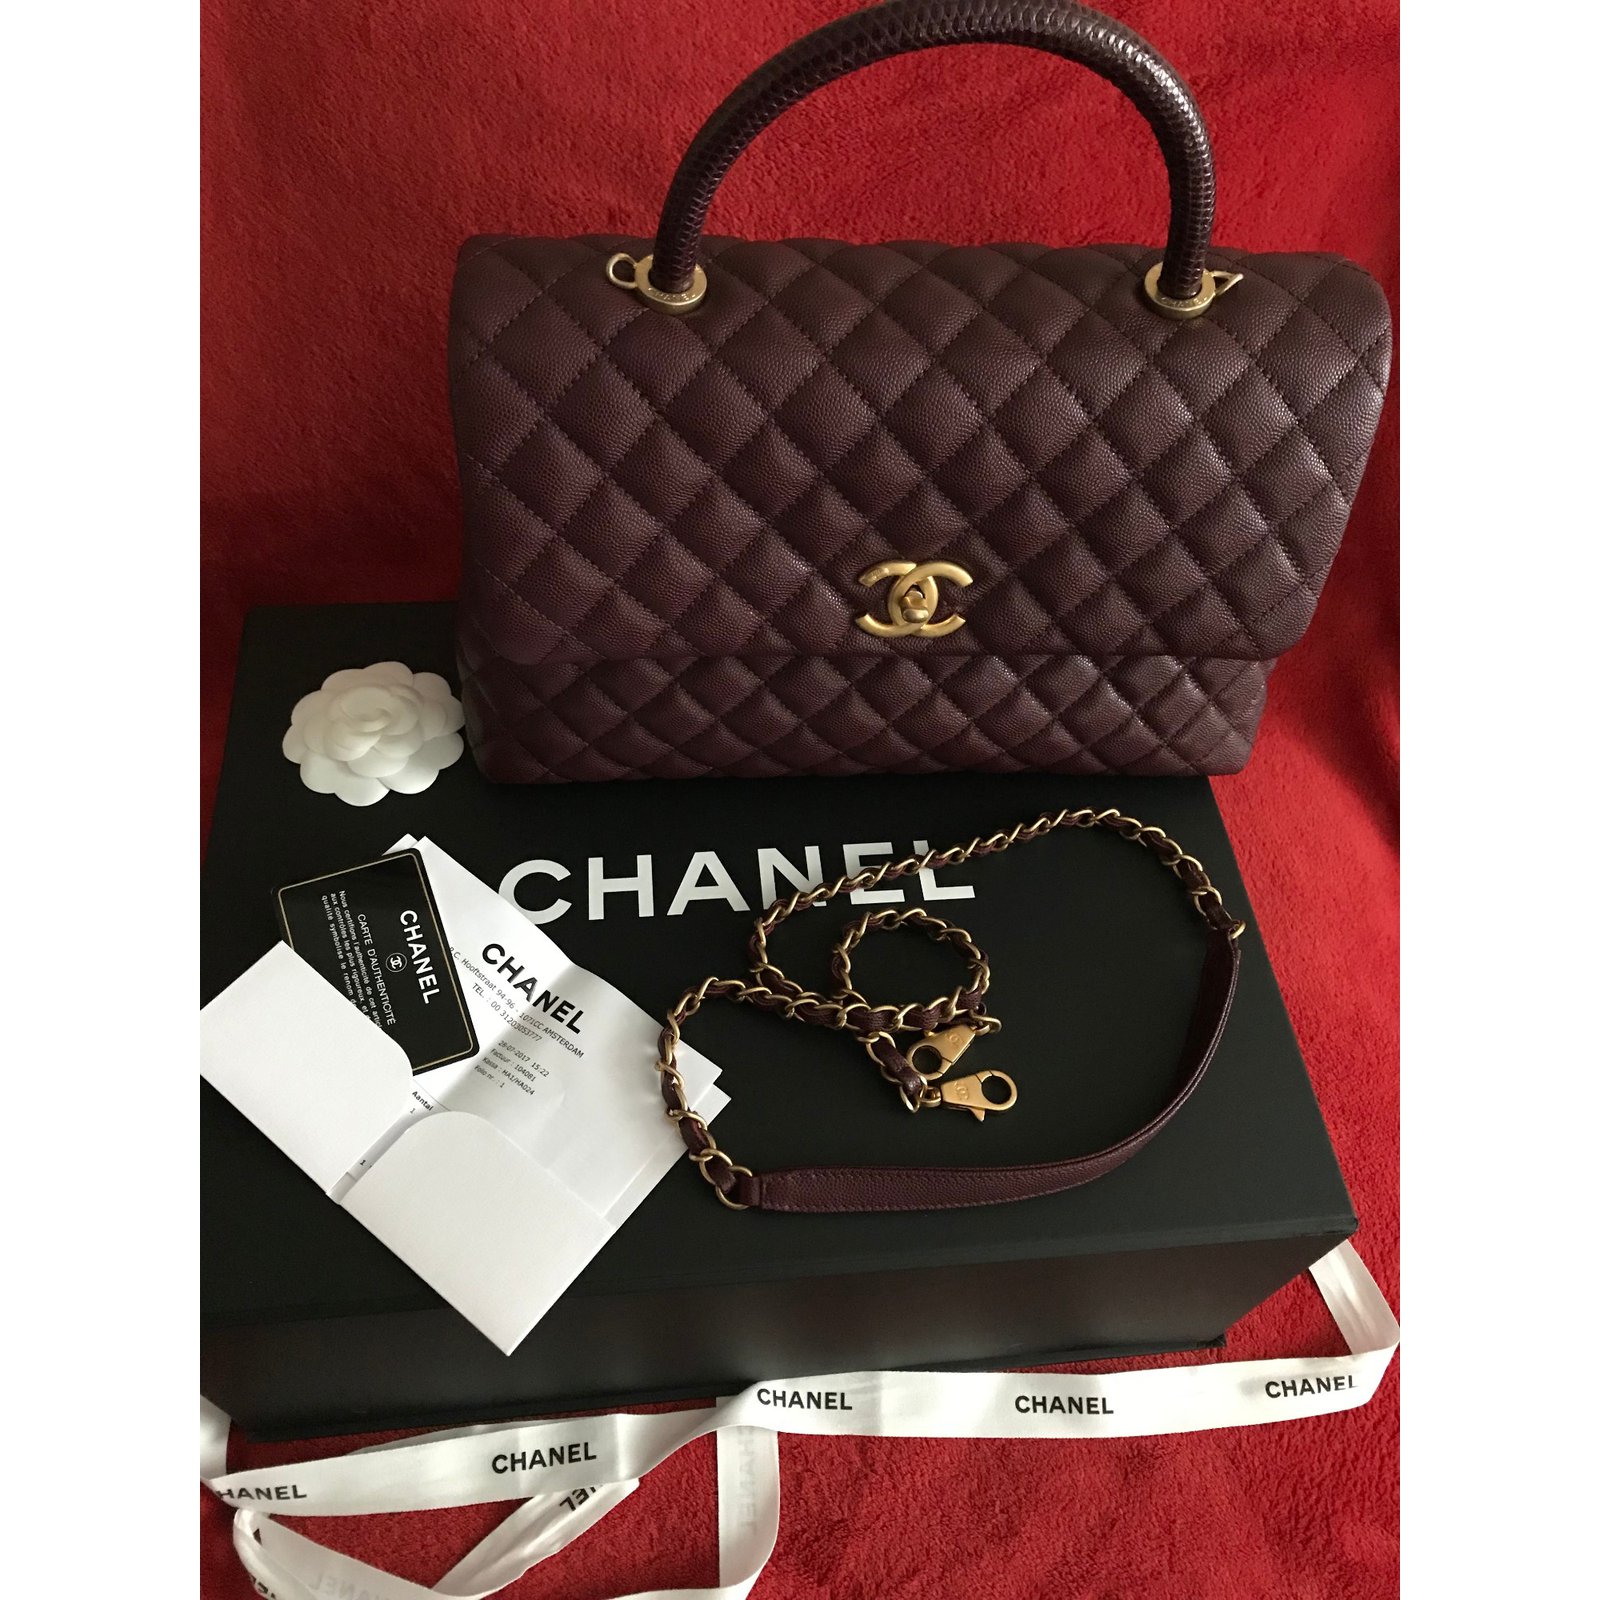 Chanel Coco Handle Medium Flap Bag Black/Burgundy with Lizard Top